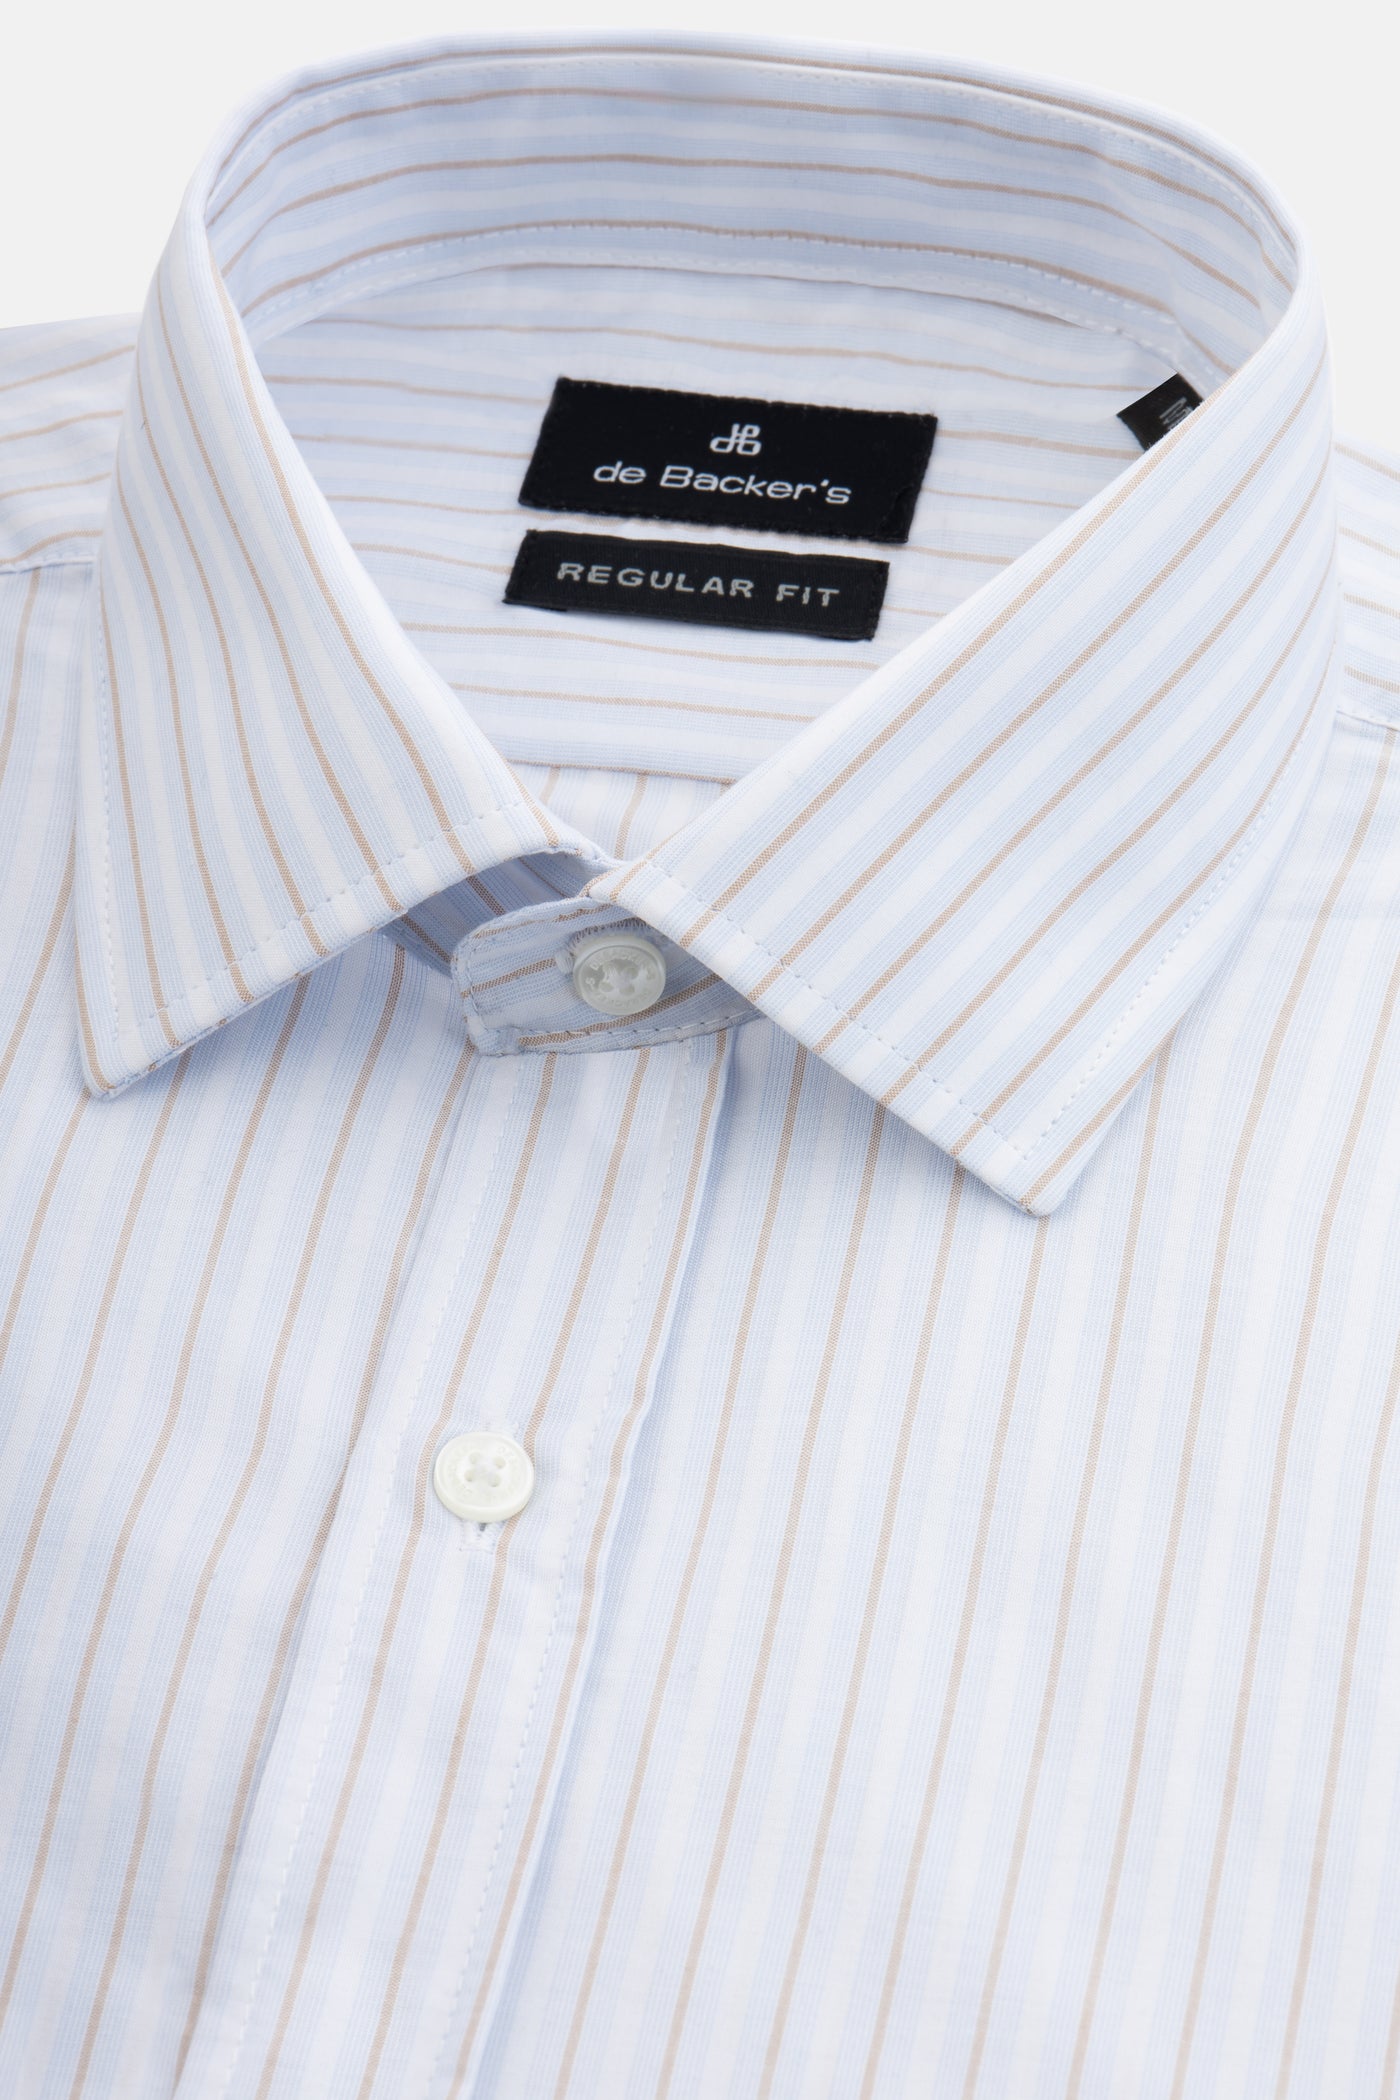 Striped White & Light Blue & Light Beige Smart Casual Shirt